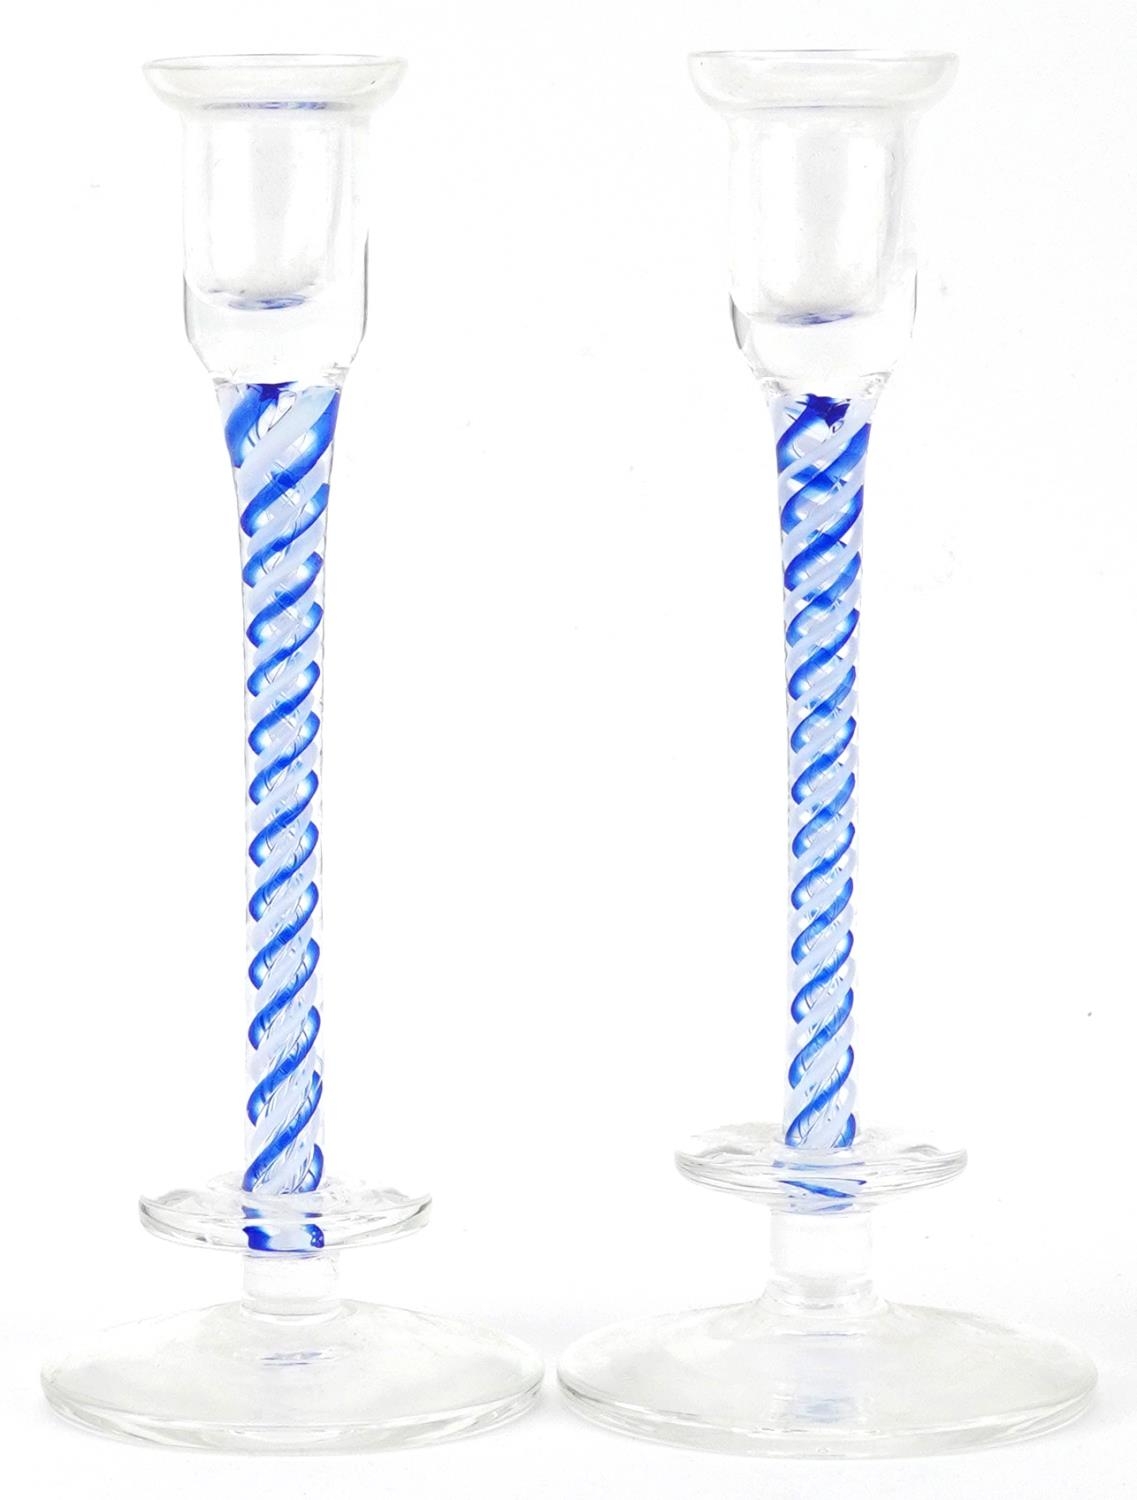 Pair of Langham glass candlesticks with opaque twist stems, each 20cm high